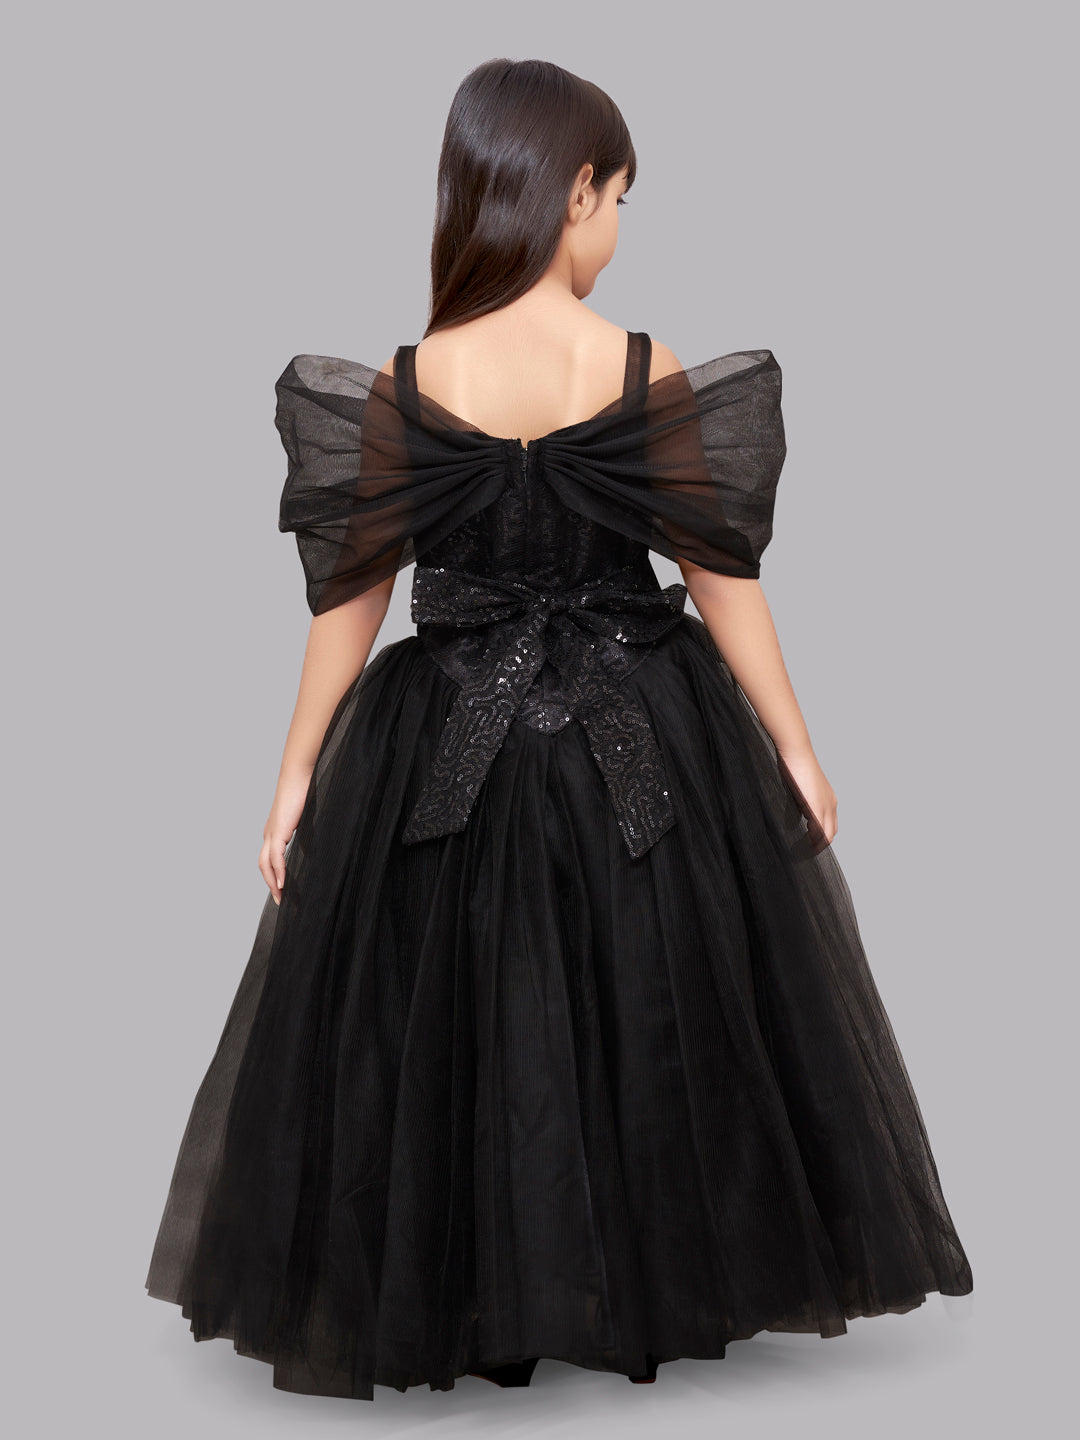 Gorgeous & Elegant Black Princess Frocks | Ball Gown Dress | Fairy Style  Dresses - YouTube